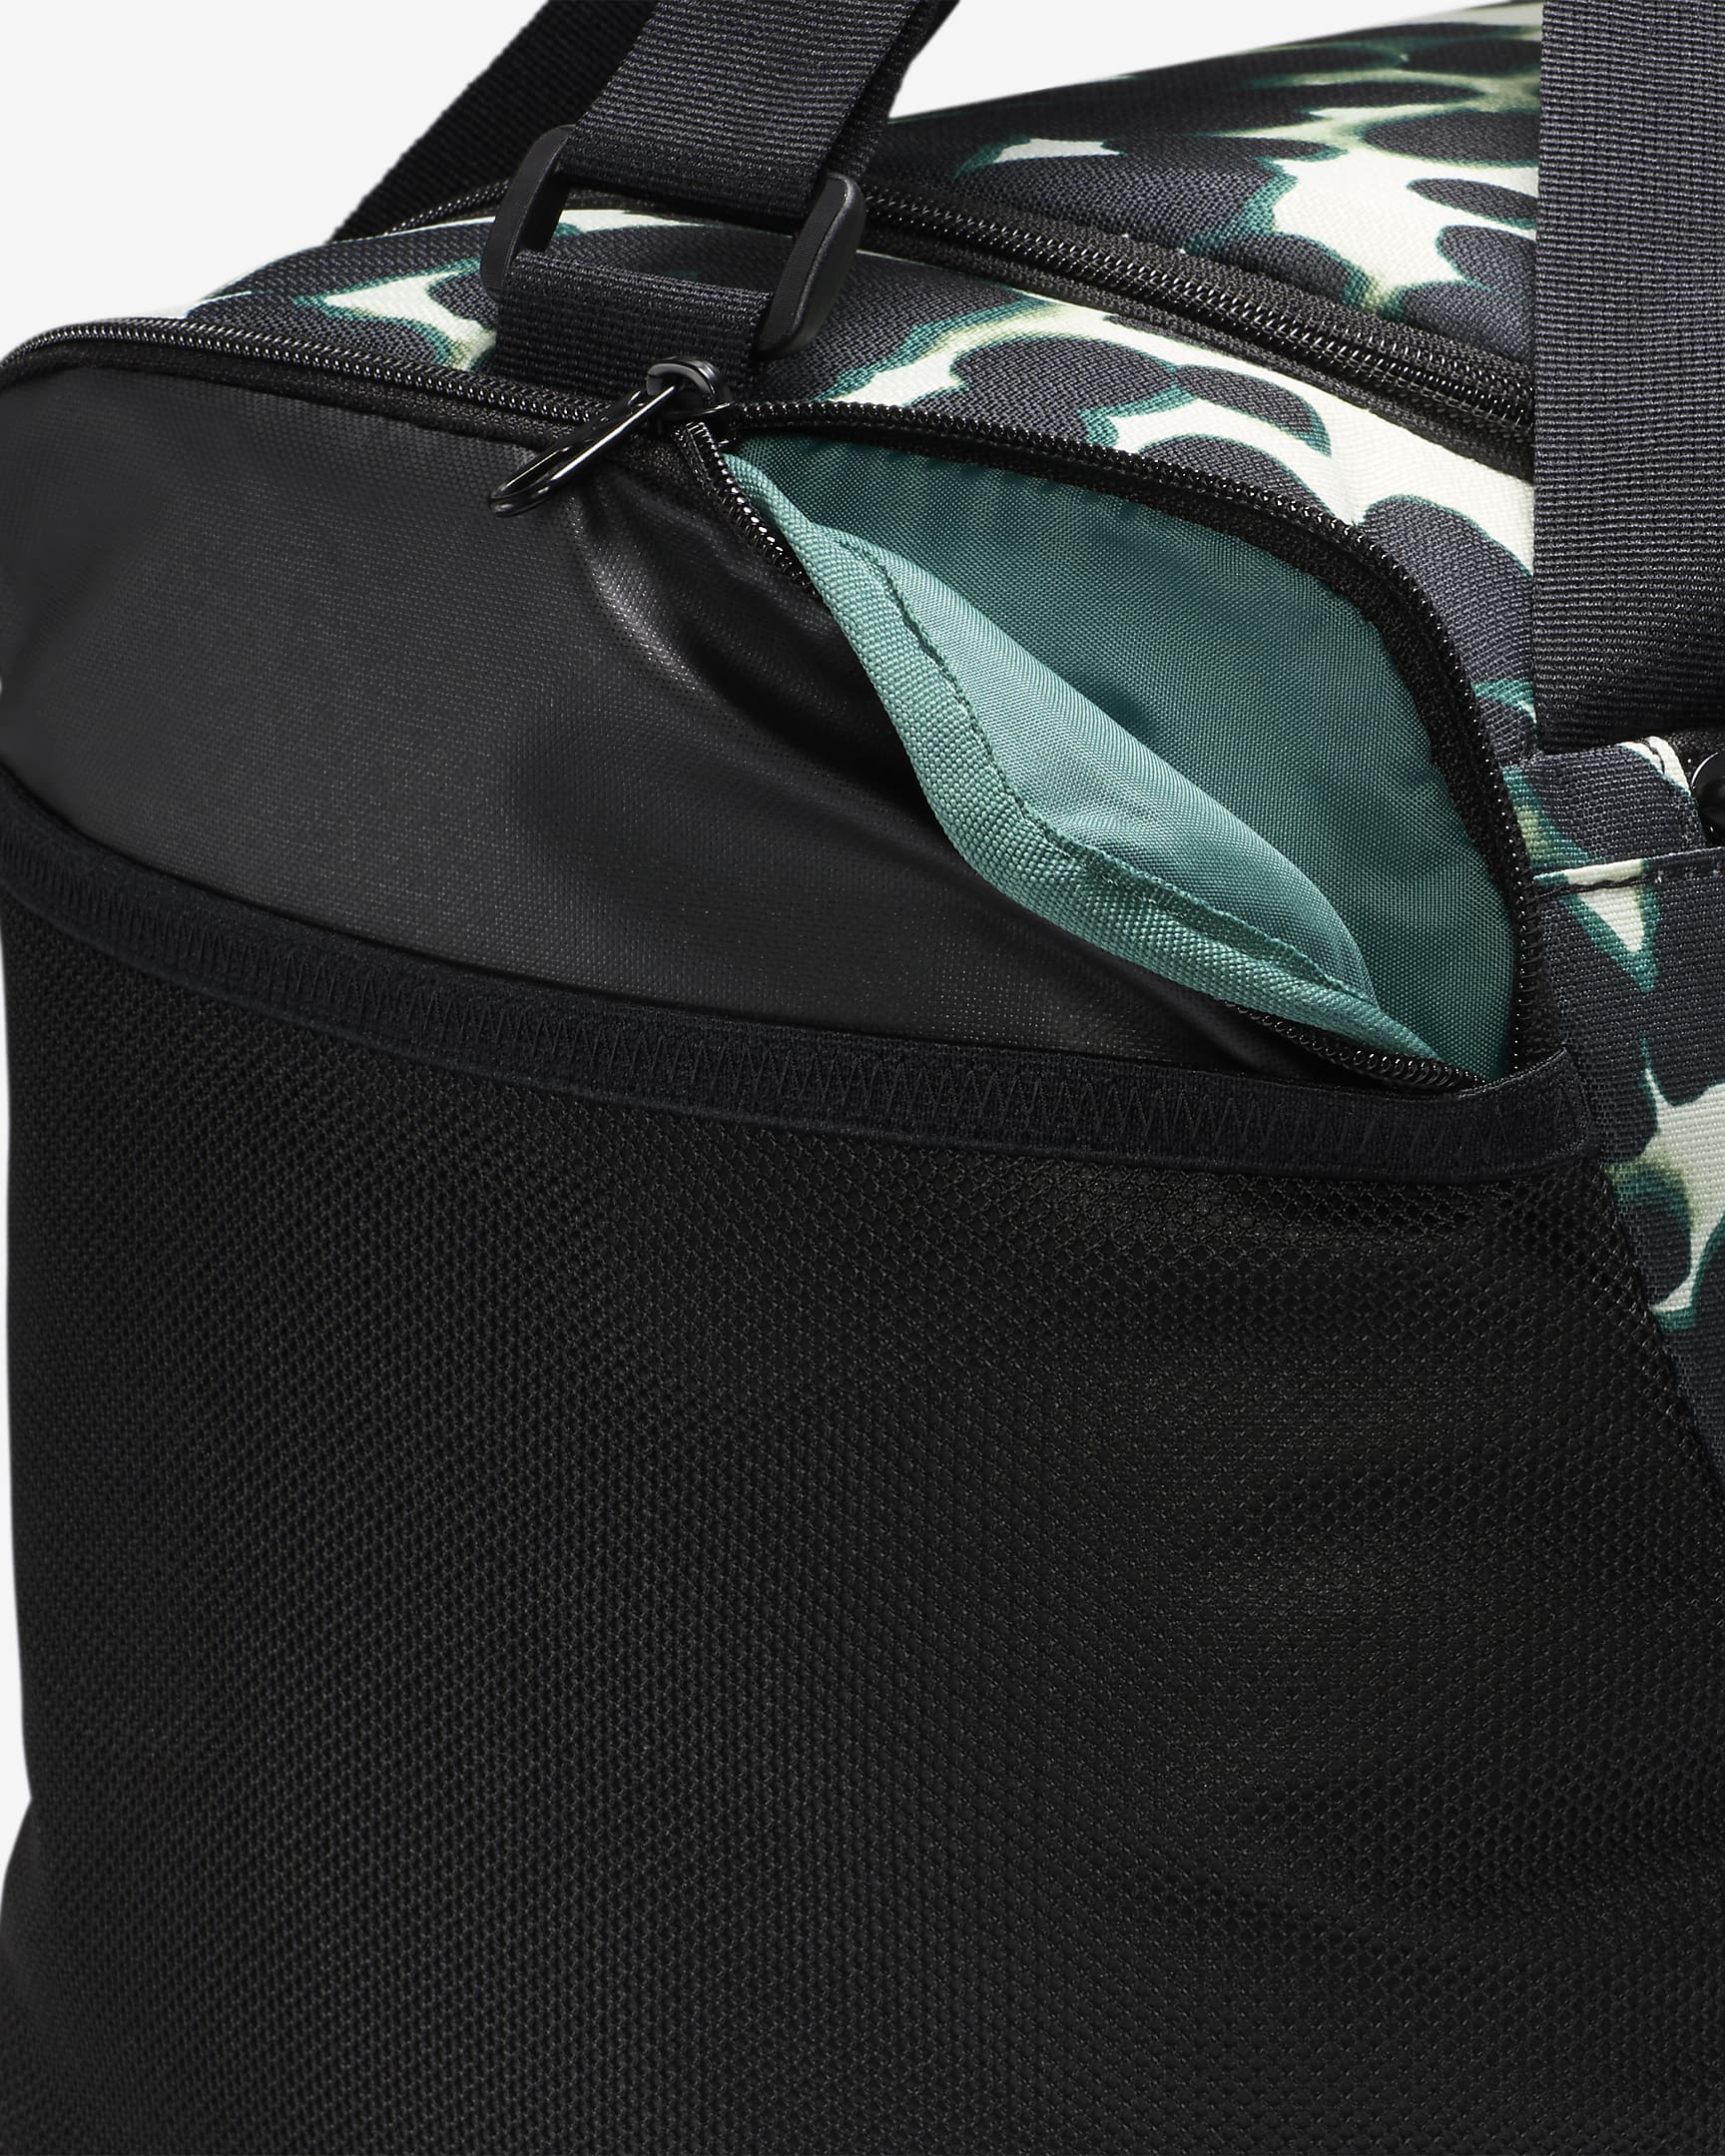 Nike Brasilia Training Duffel Bag (Small, 41L). Nike CA